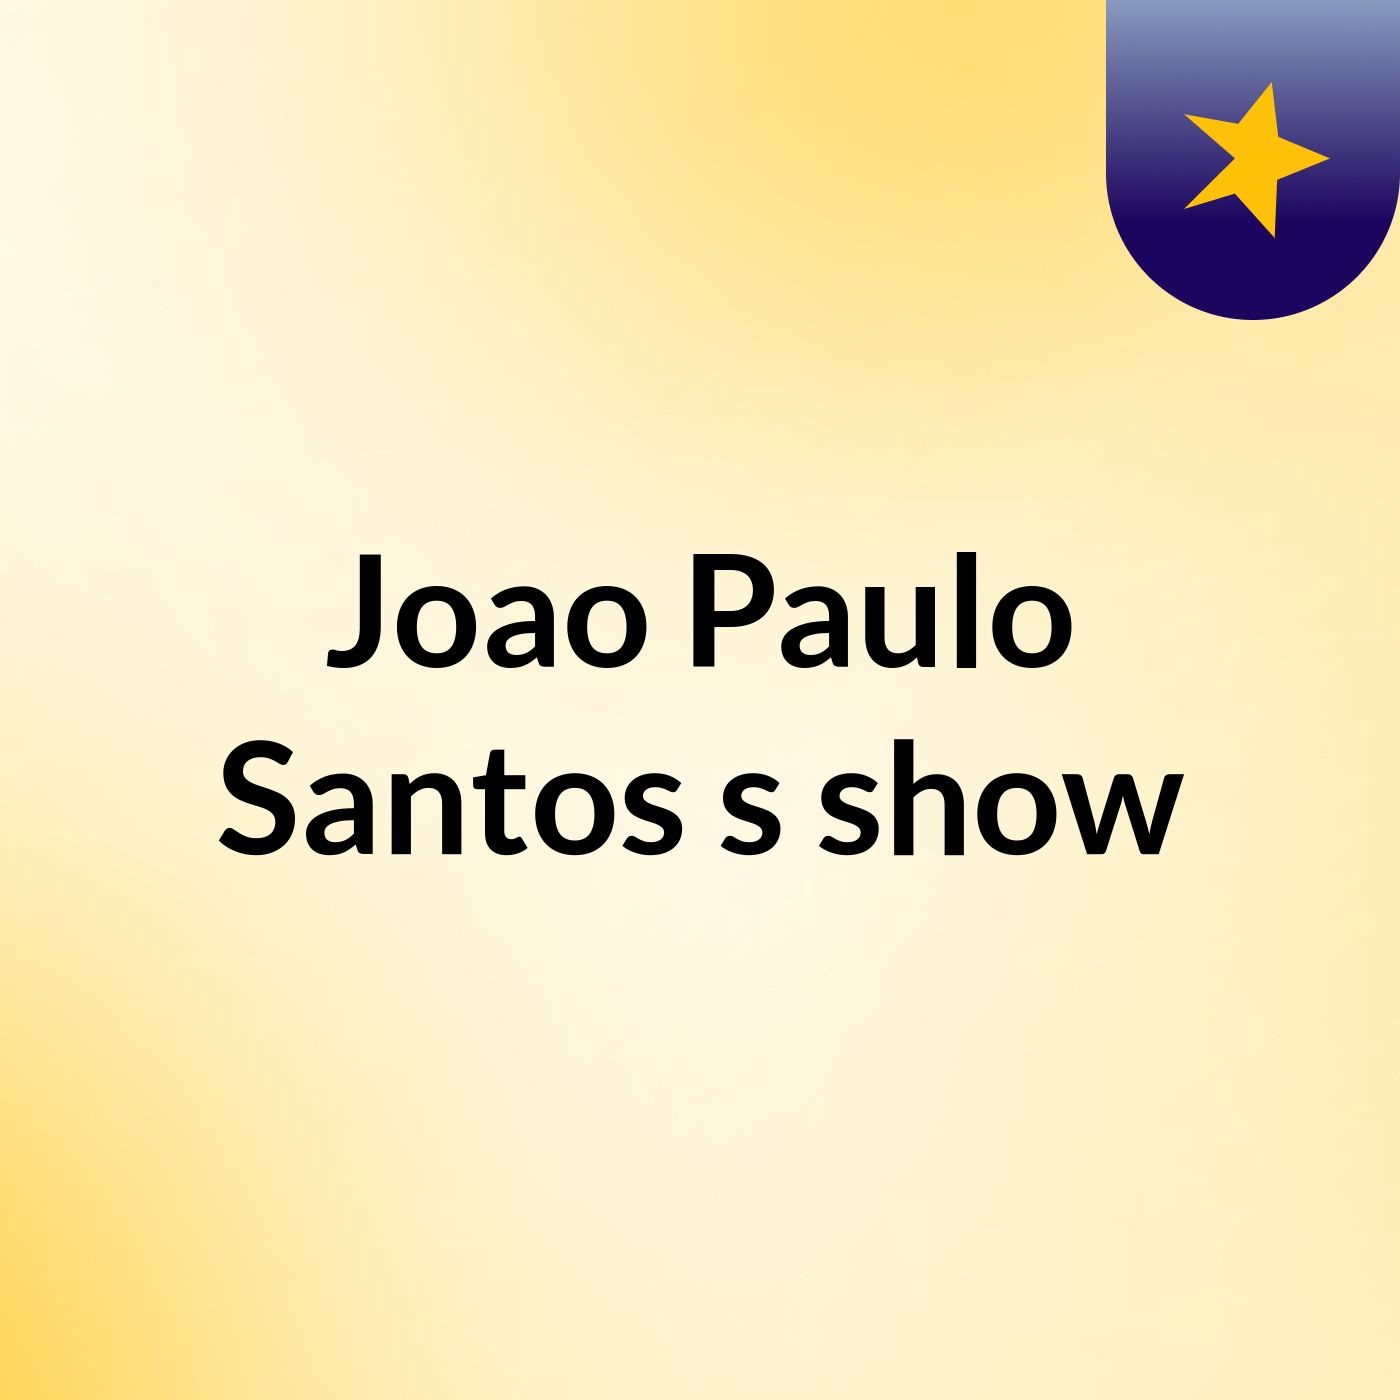 Joao Paulo Santos's show